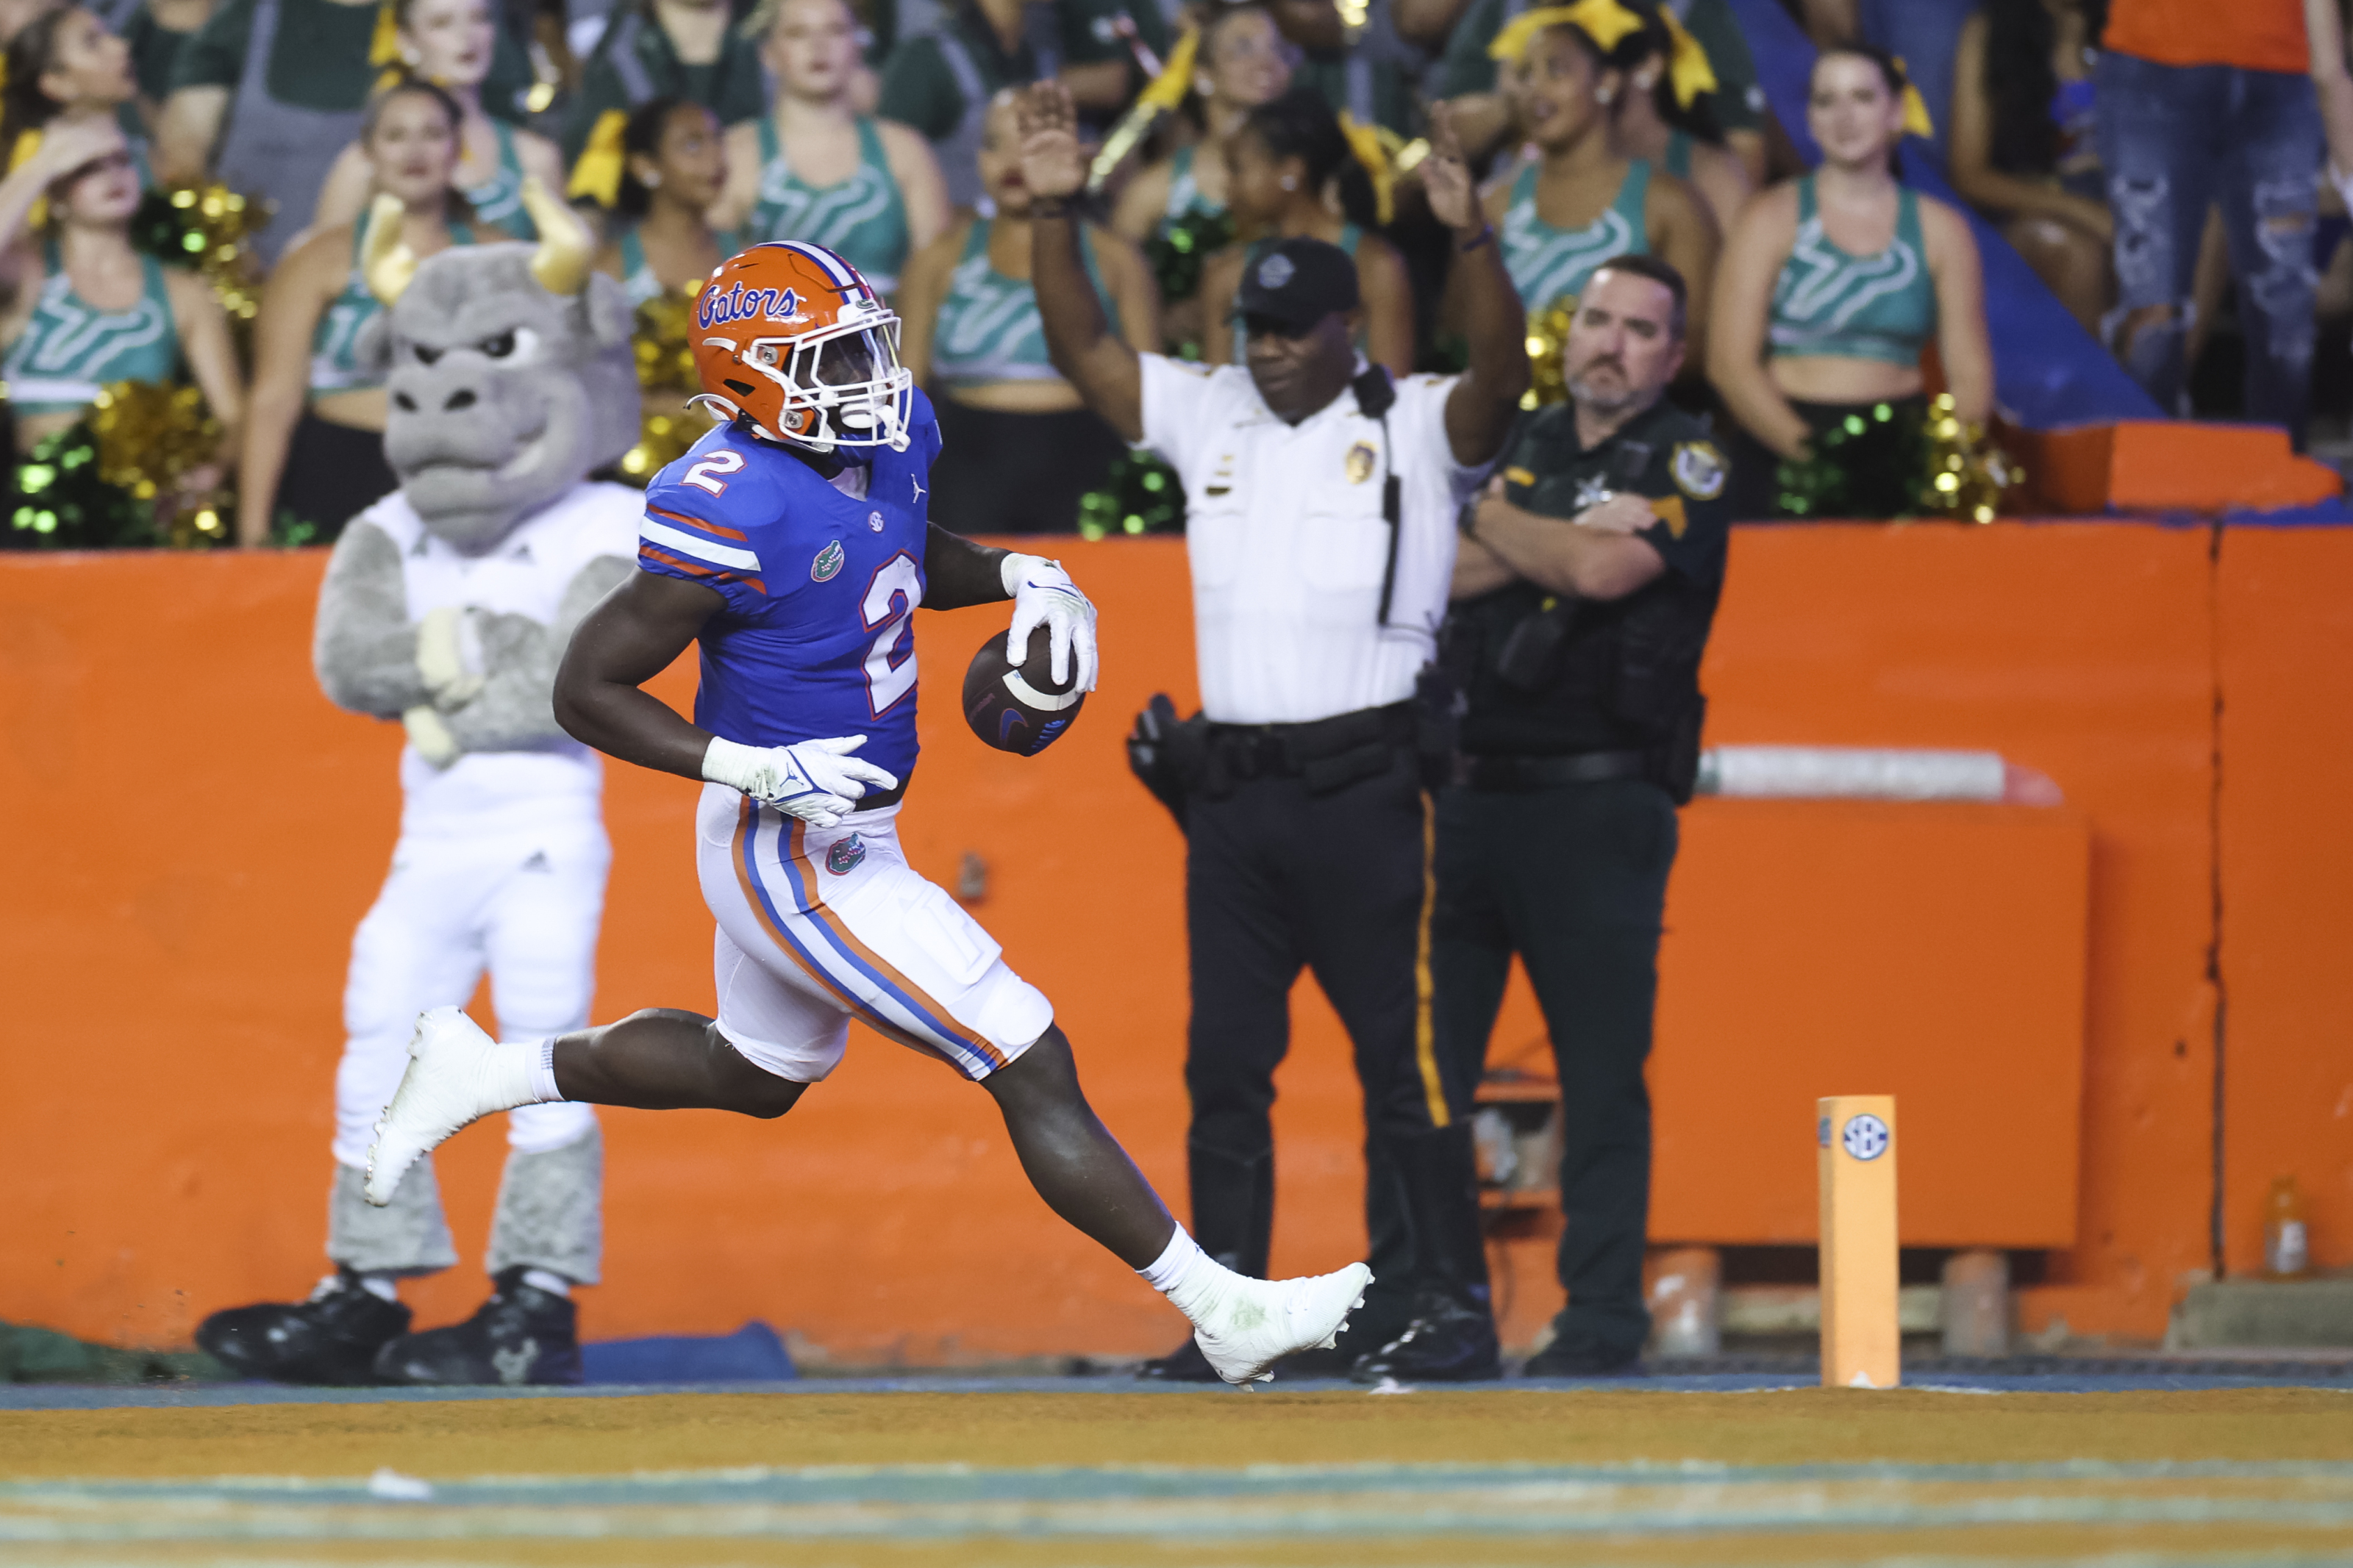 Florida football: Gators gets back on track with big win vs. EWU